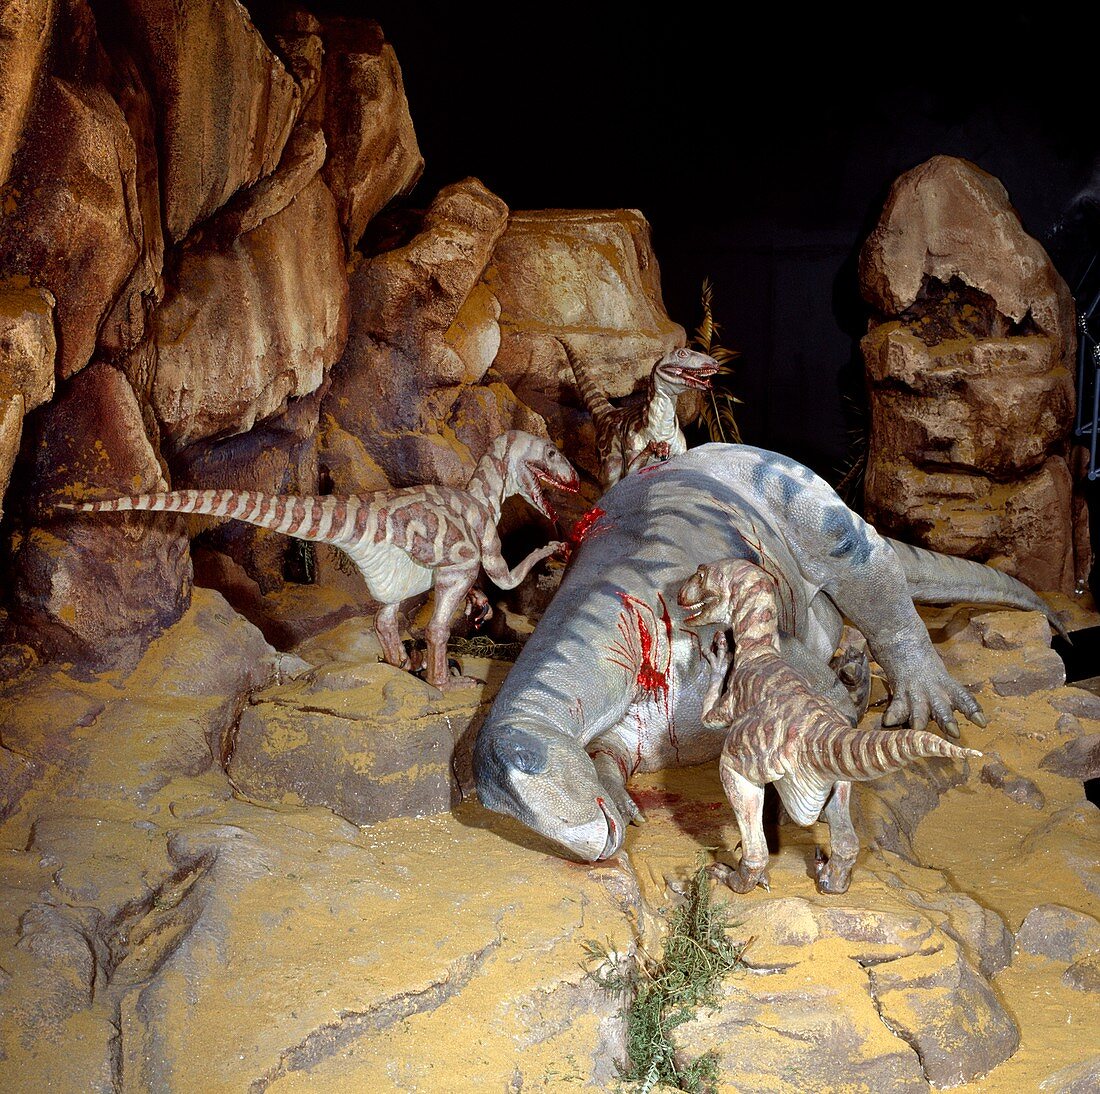 Dinosaurs feeding on prey,museum model